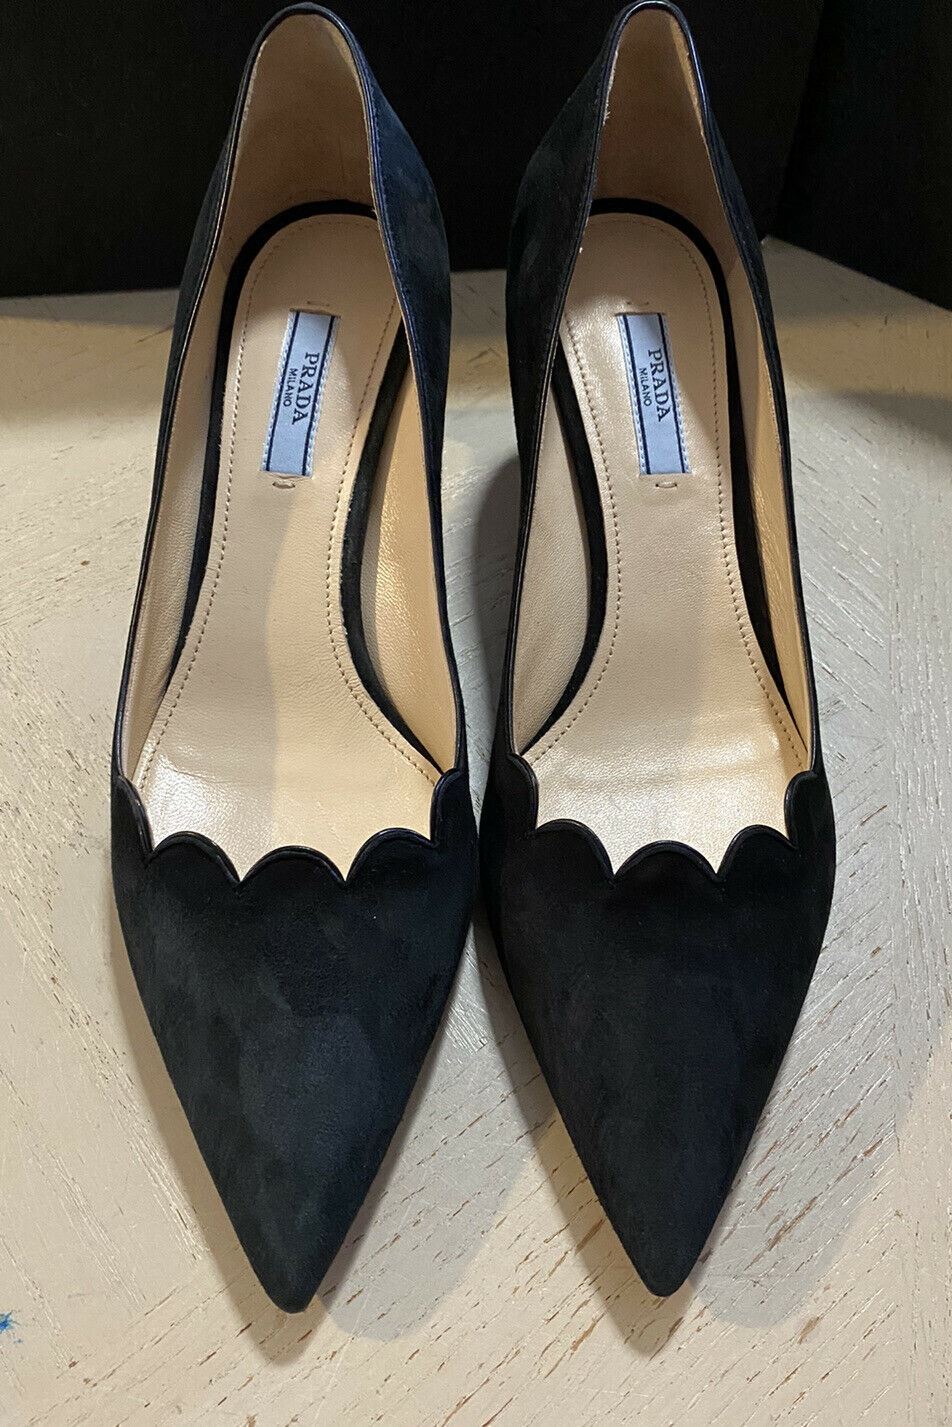 NIB $750 PRADA Women Scallop Suede Pumps Shoes Black 8 US/38 Eu Italy